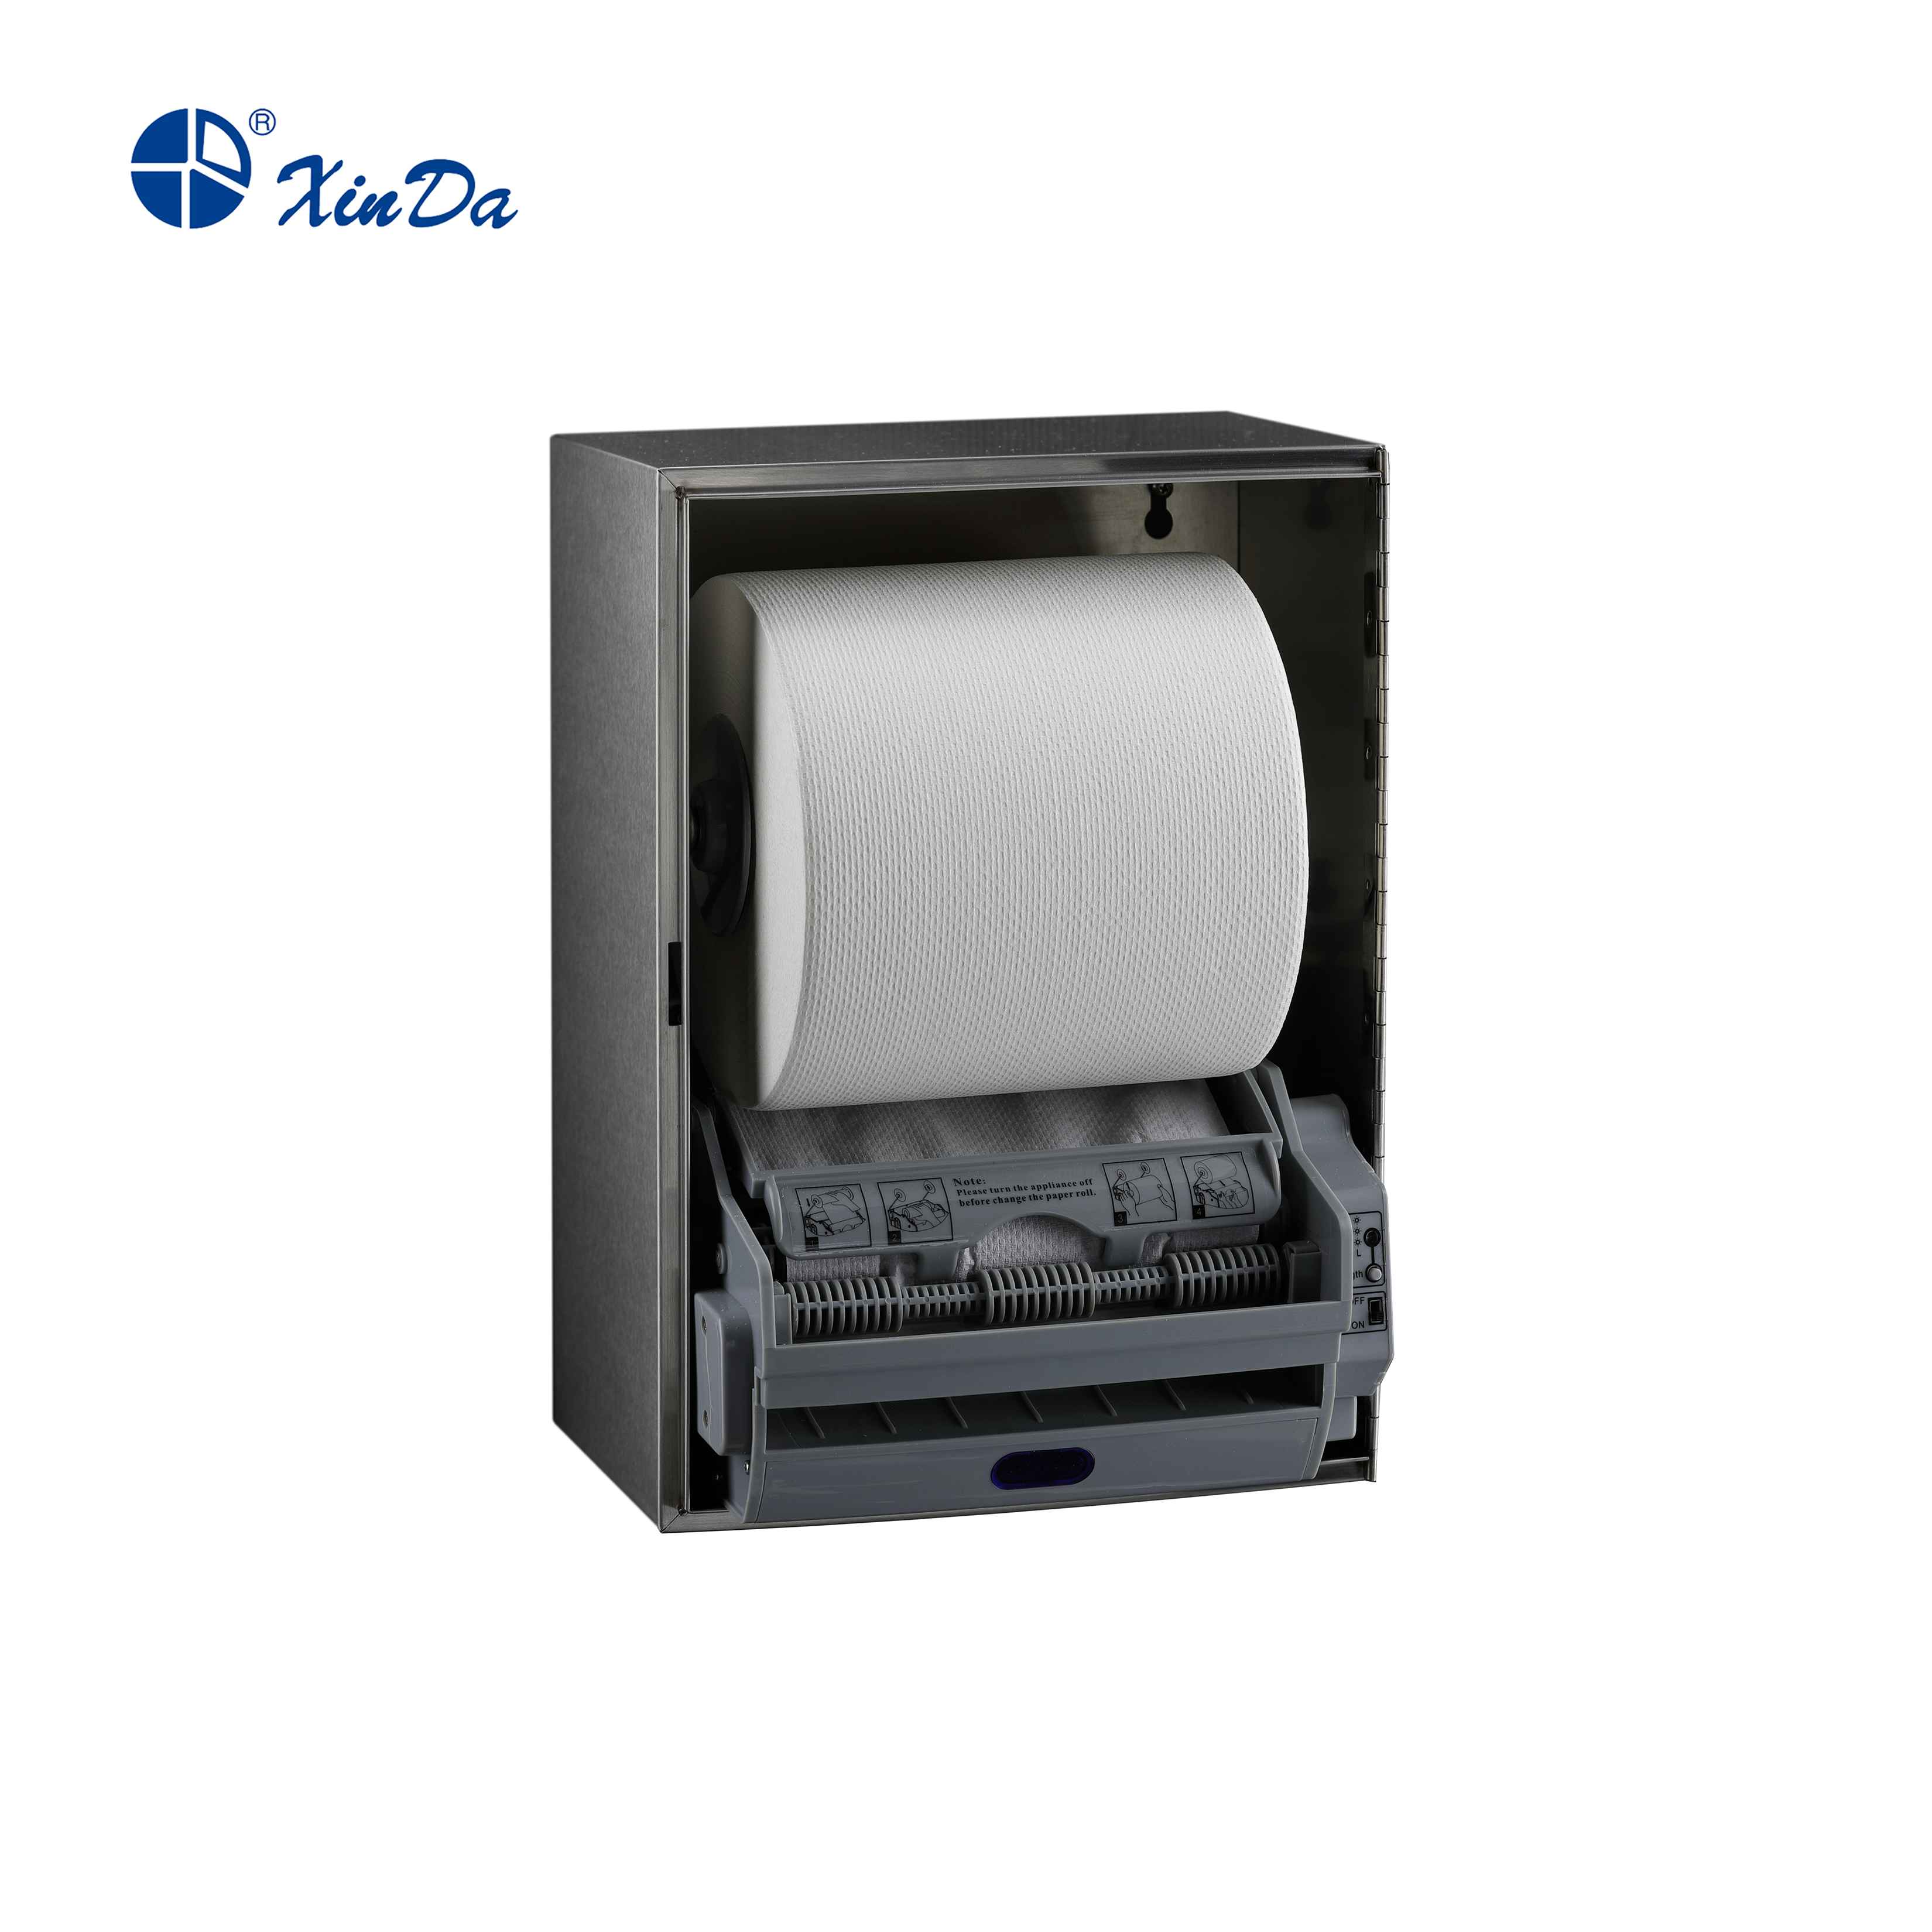 The XinDa CZQ20K Toilet Kitchen Hand Paper Towel Dispenser Factory Price Manual Facial Paper Dispenser